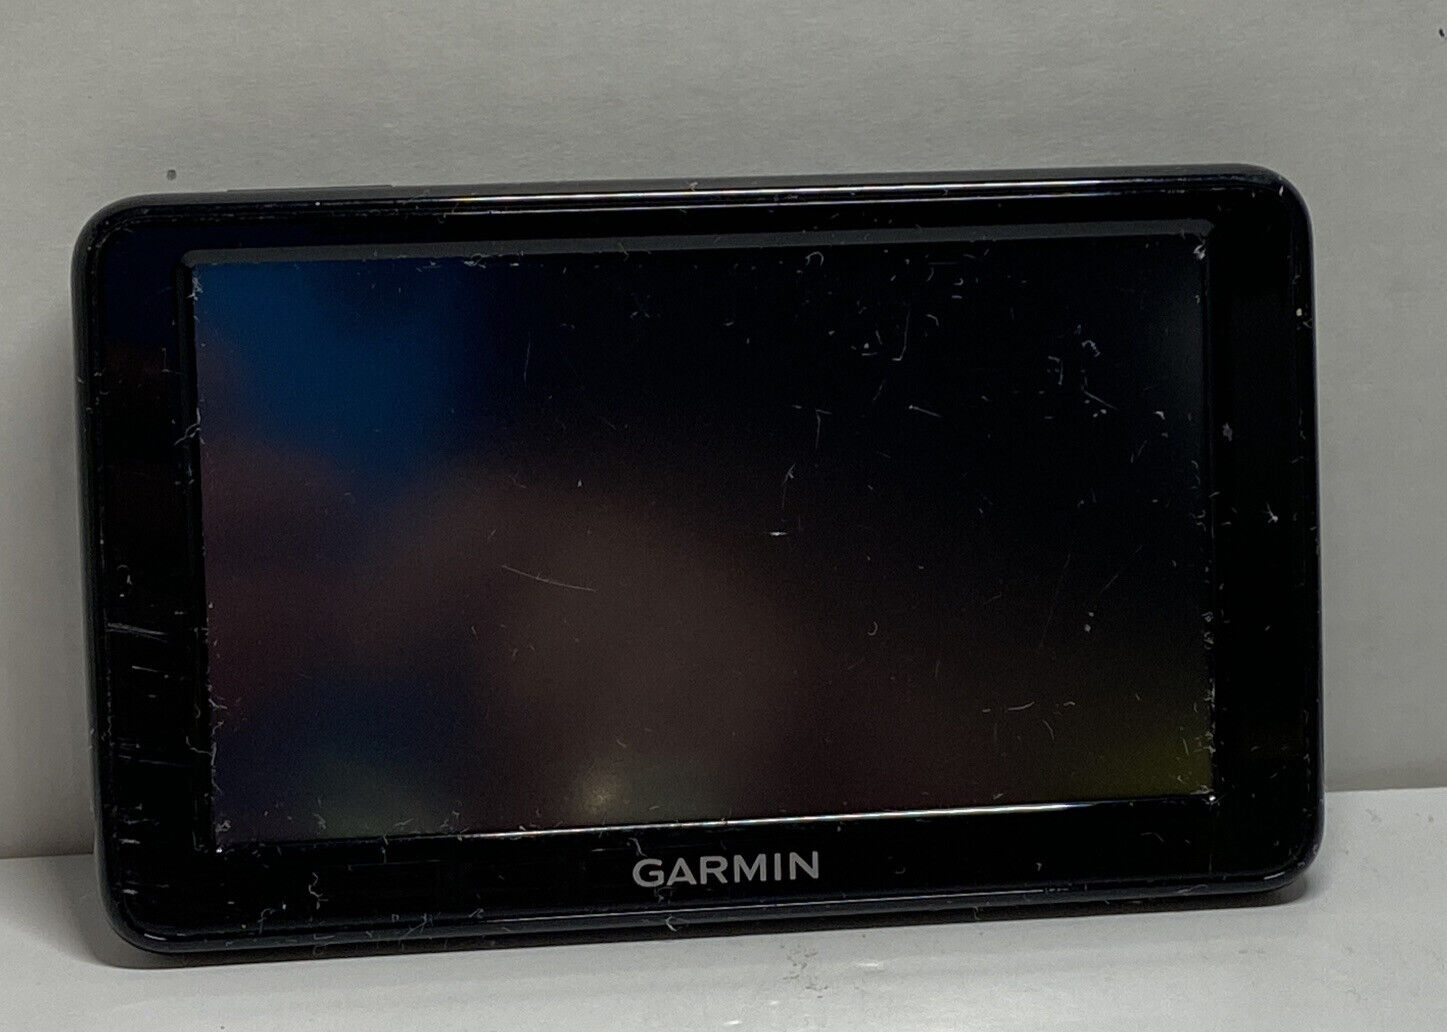 Garmin Nuvi 2595lm With Bluetooth - No Cords